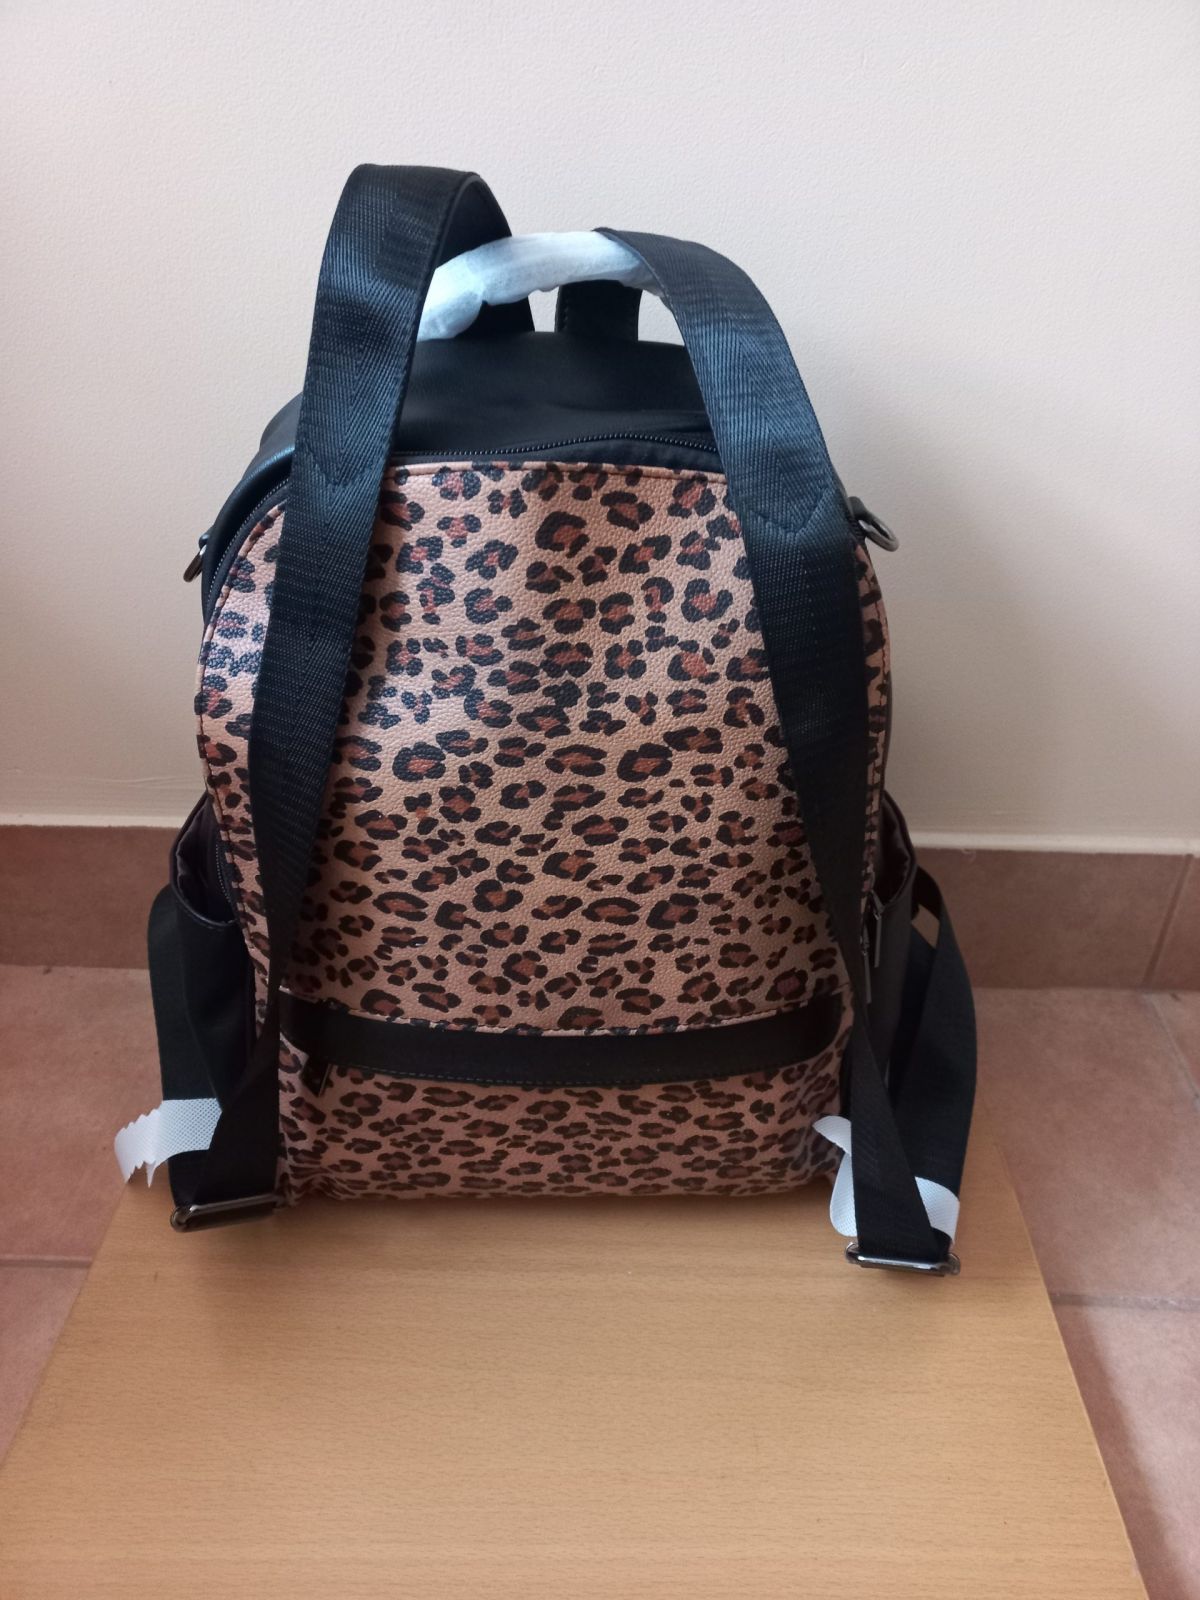 Backpack for women girls, leopard